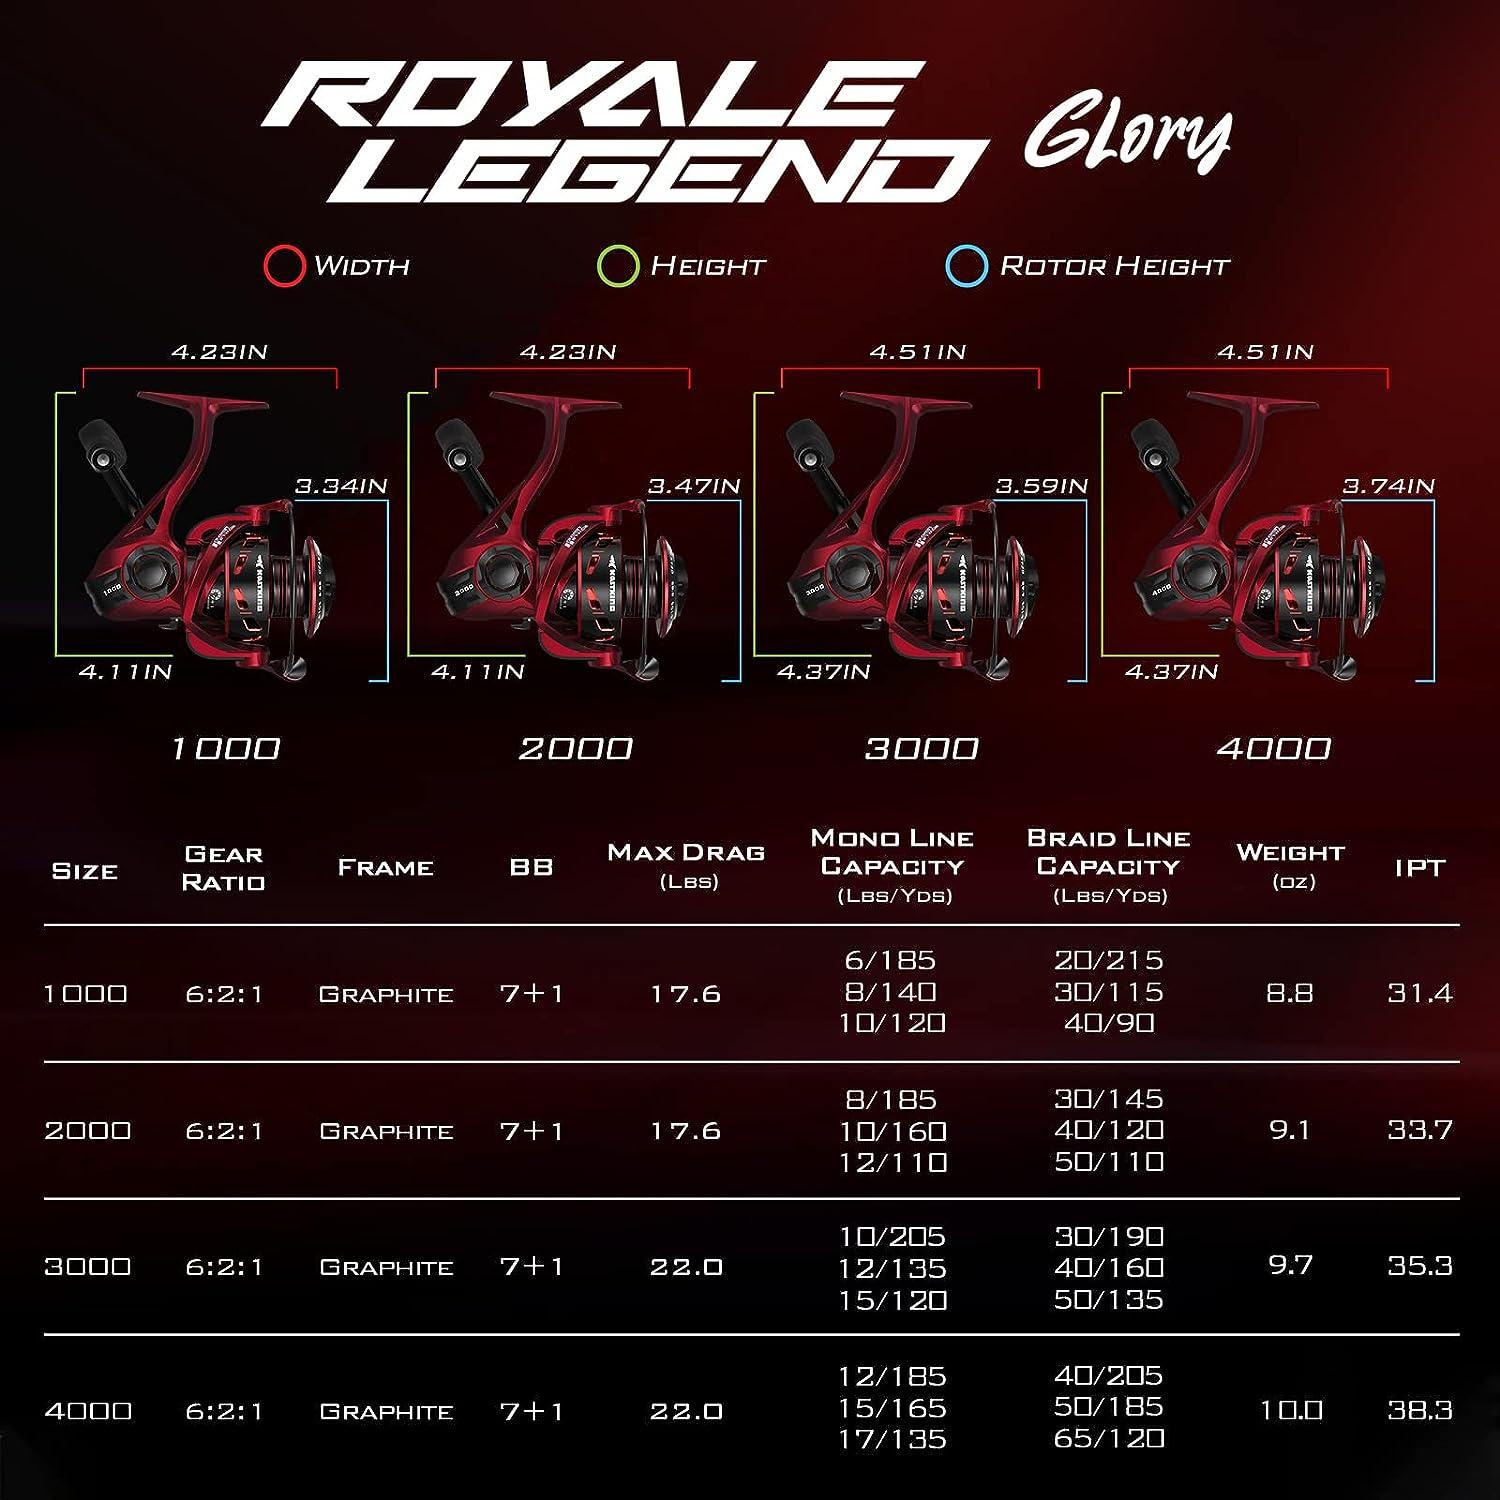 Royale Legend Glory Fishing Reel - 6.2:1 Gear Ratio Spinning Reel